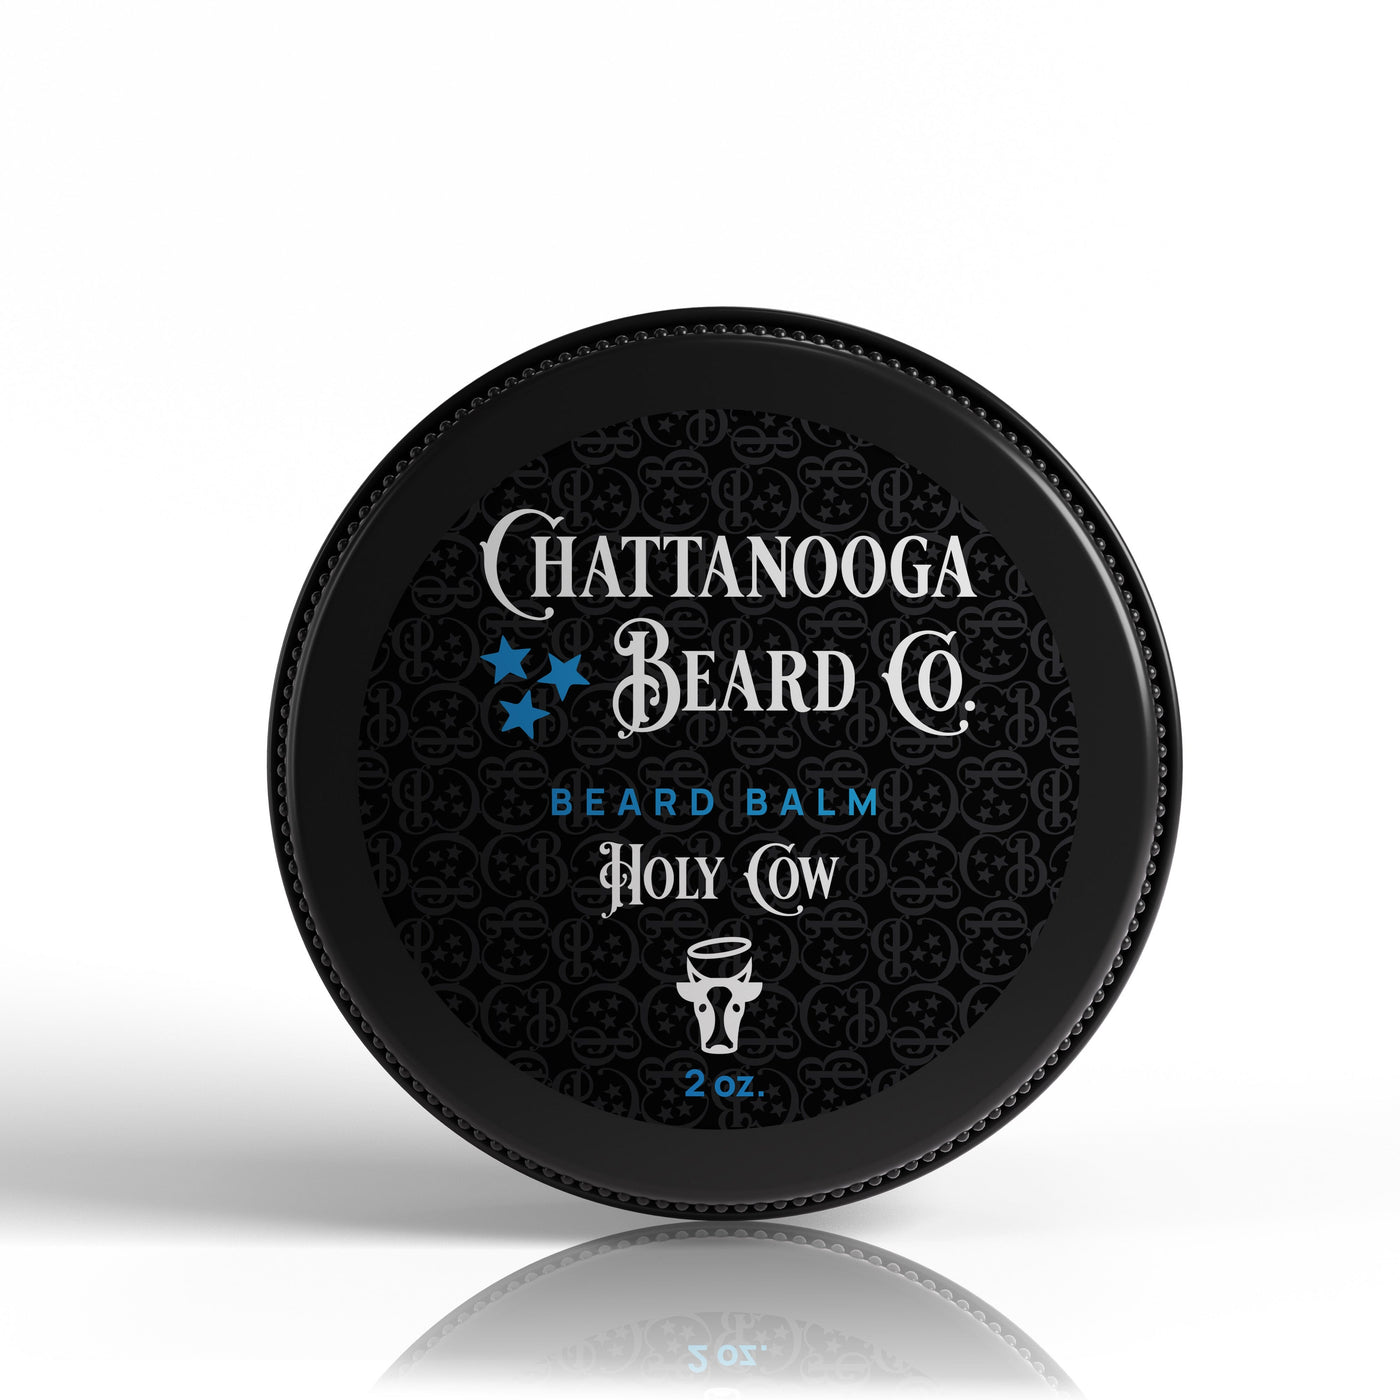 Chattanooga Beard Co. - Beard Balm Balm Chattanooga Beard Co. Holy Cow 